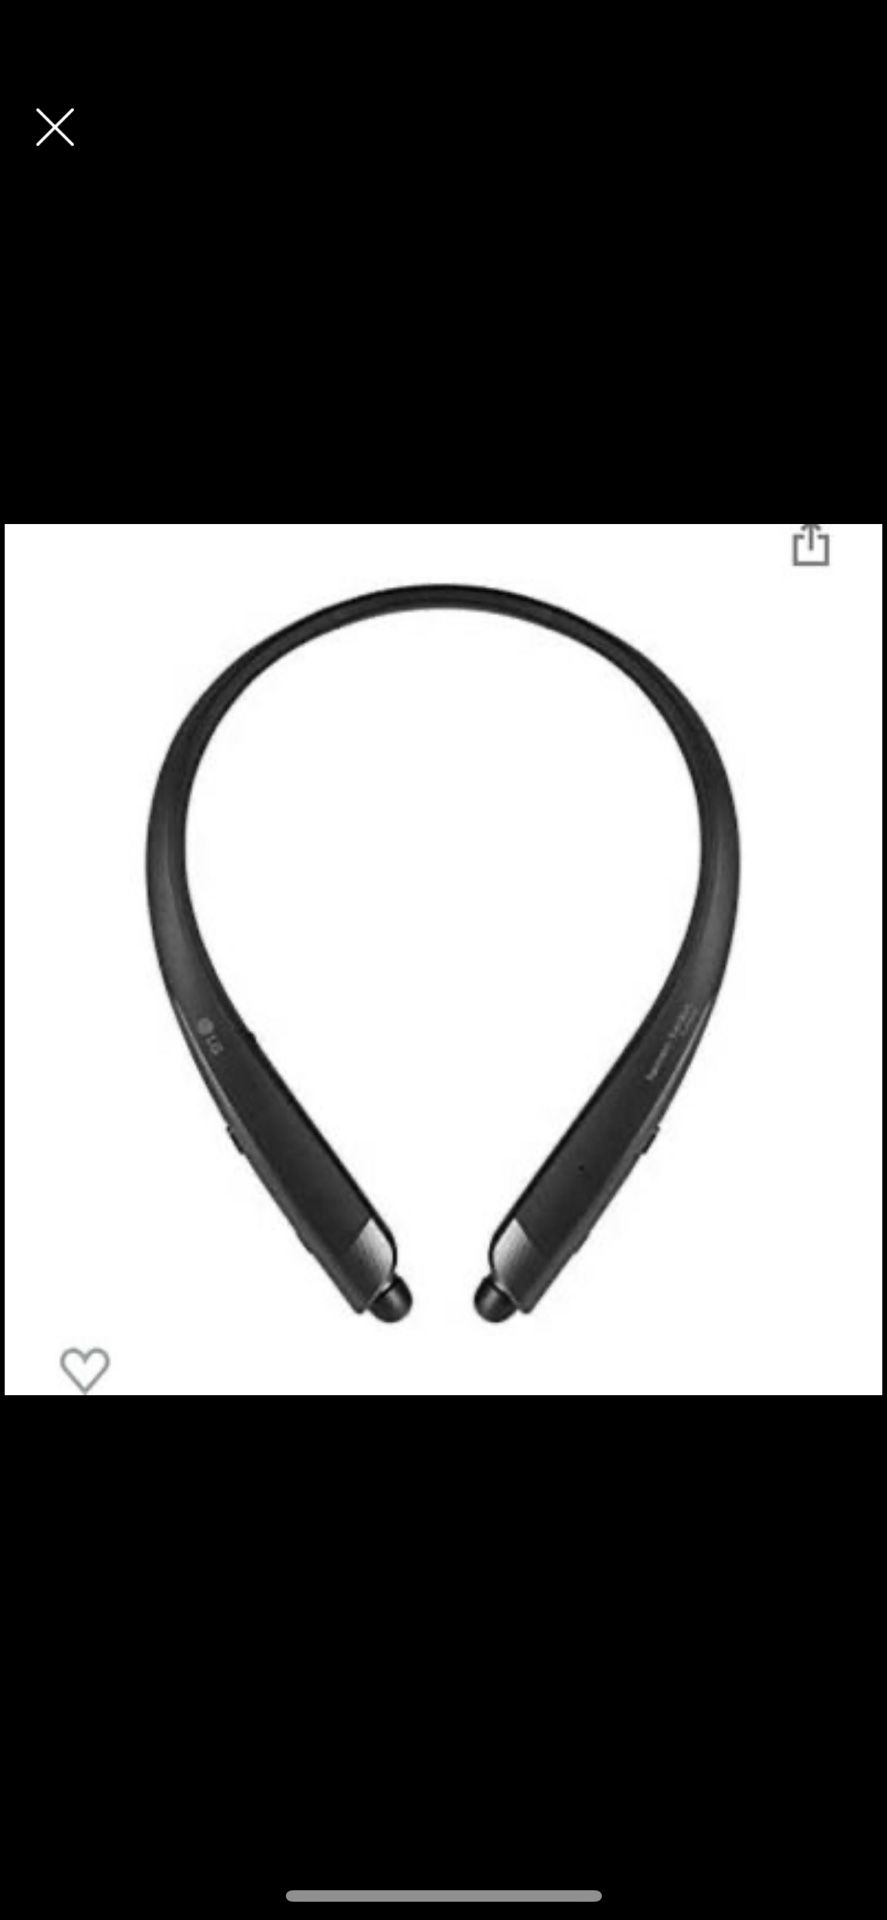 LG Tone Platinum Plus HBS-1125 Wireless Stereo Headset - Black